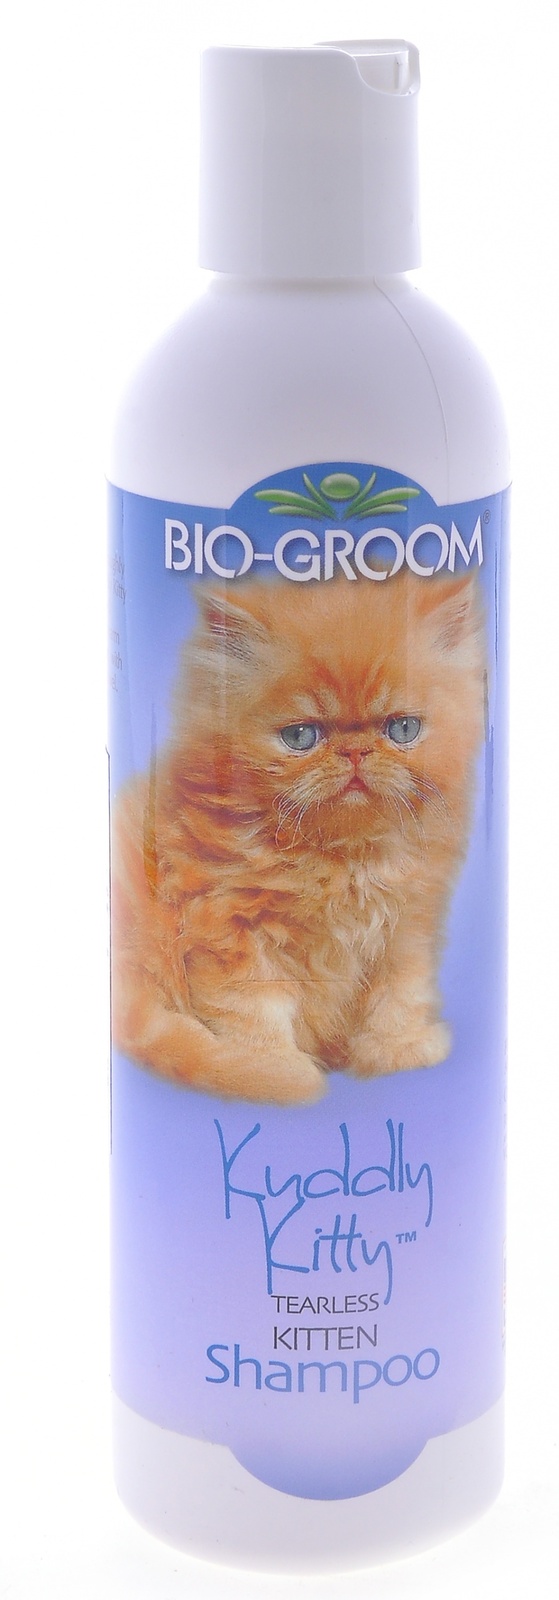 Biogroom шампунь для котят, концентрат 1:2, 0.7 литра готового шампуня (236 г)